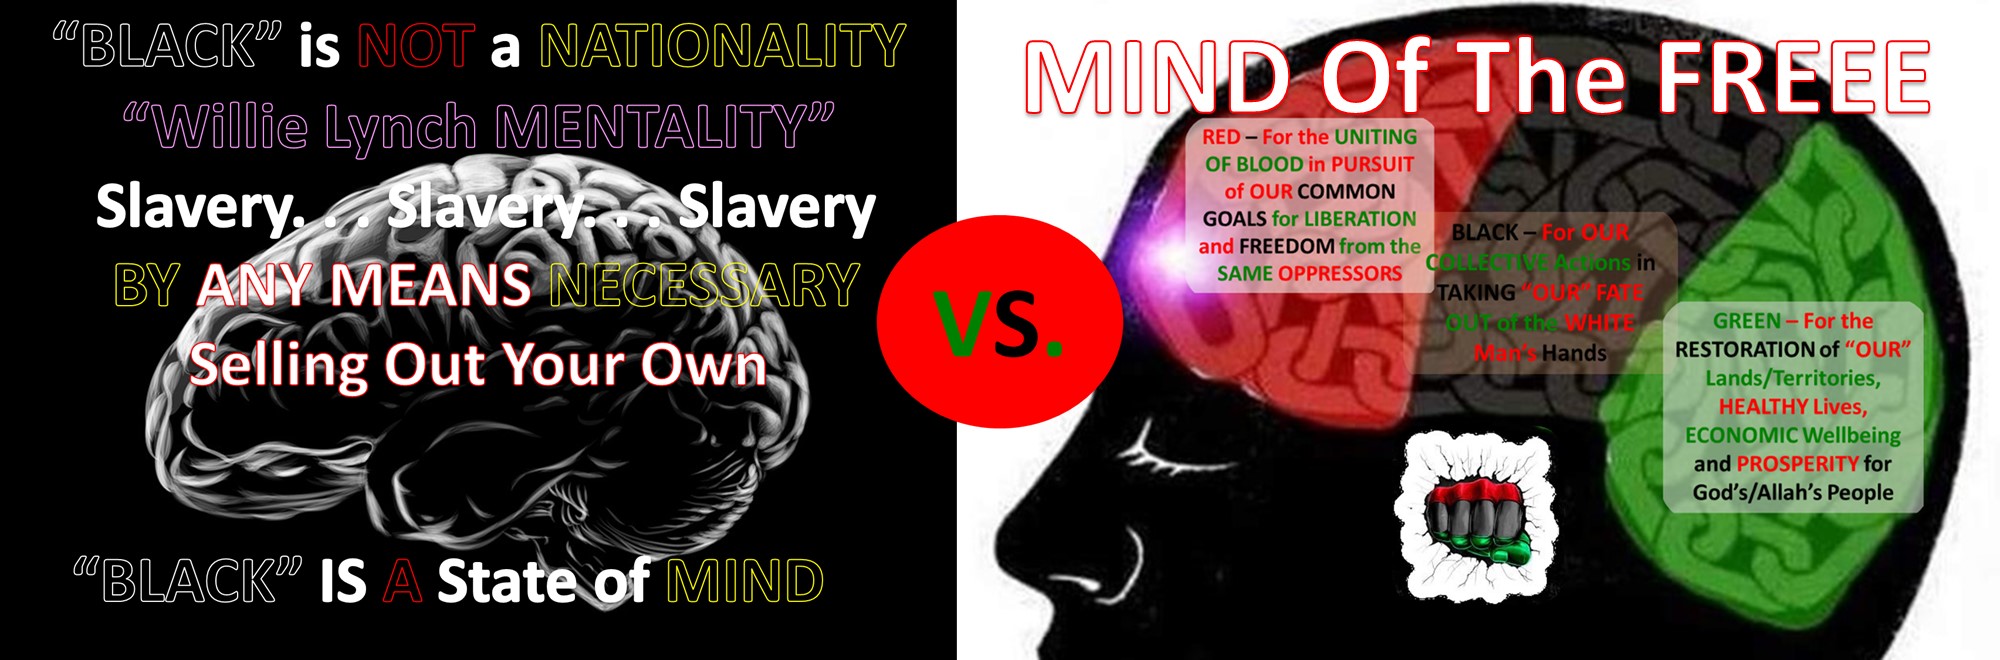 BLACK SLAVE Mind vs The FREE Mind